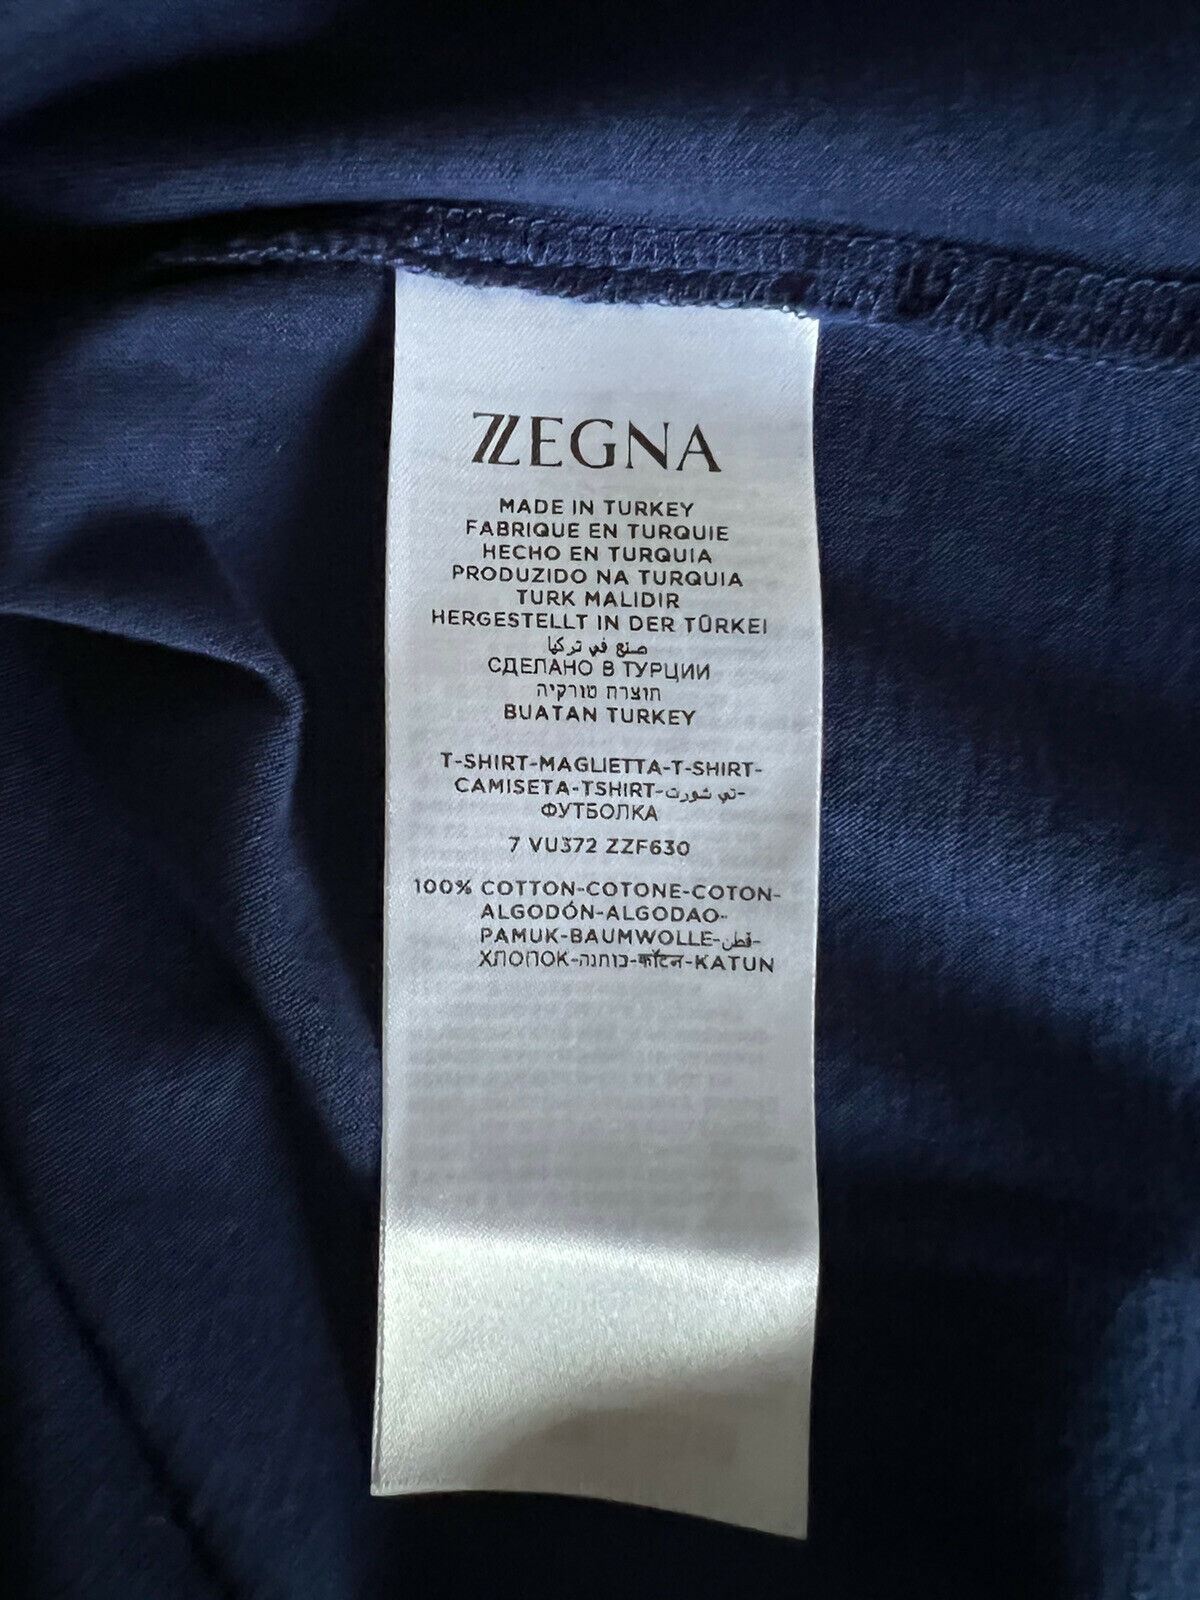 СЗТ $325 ZZEGNA Синяя футболка с круглым вырезом XL ZZF630